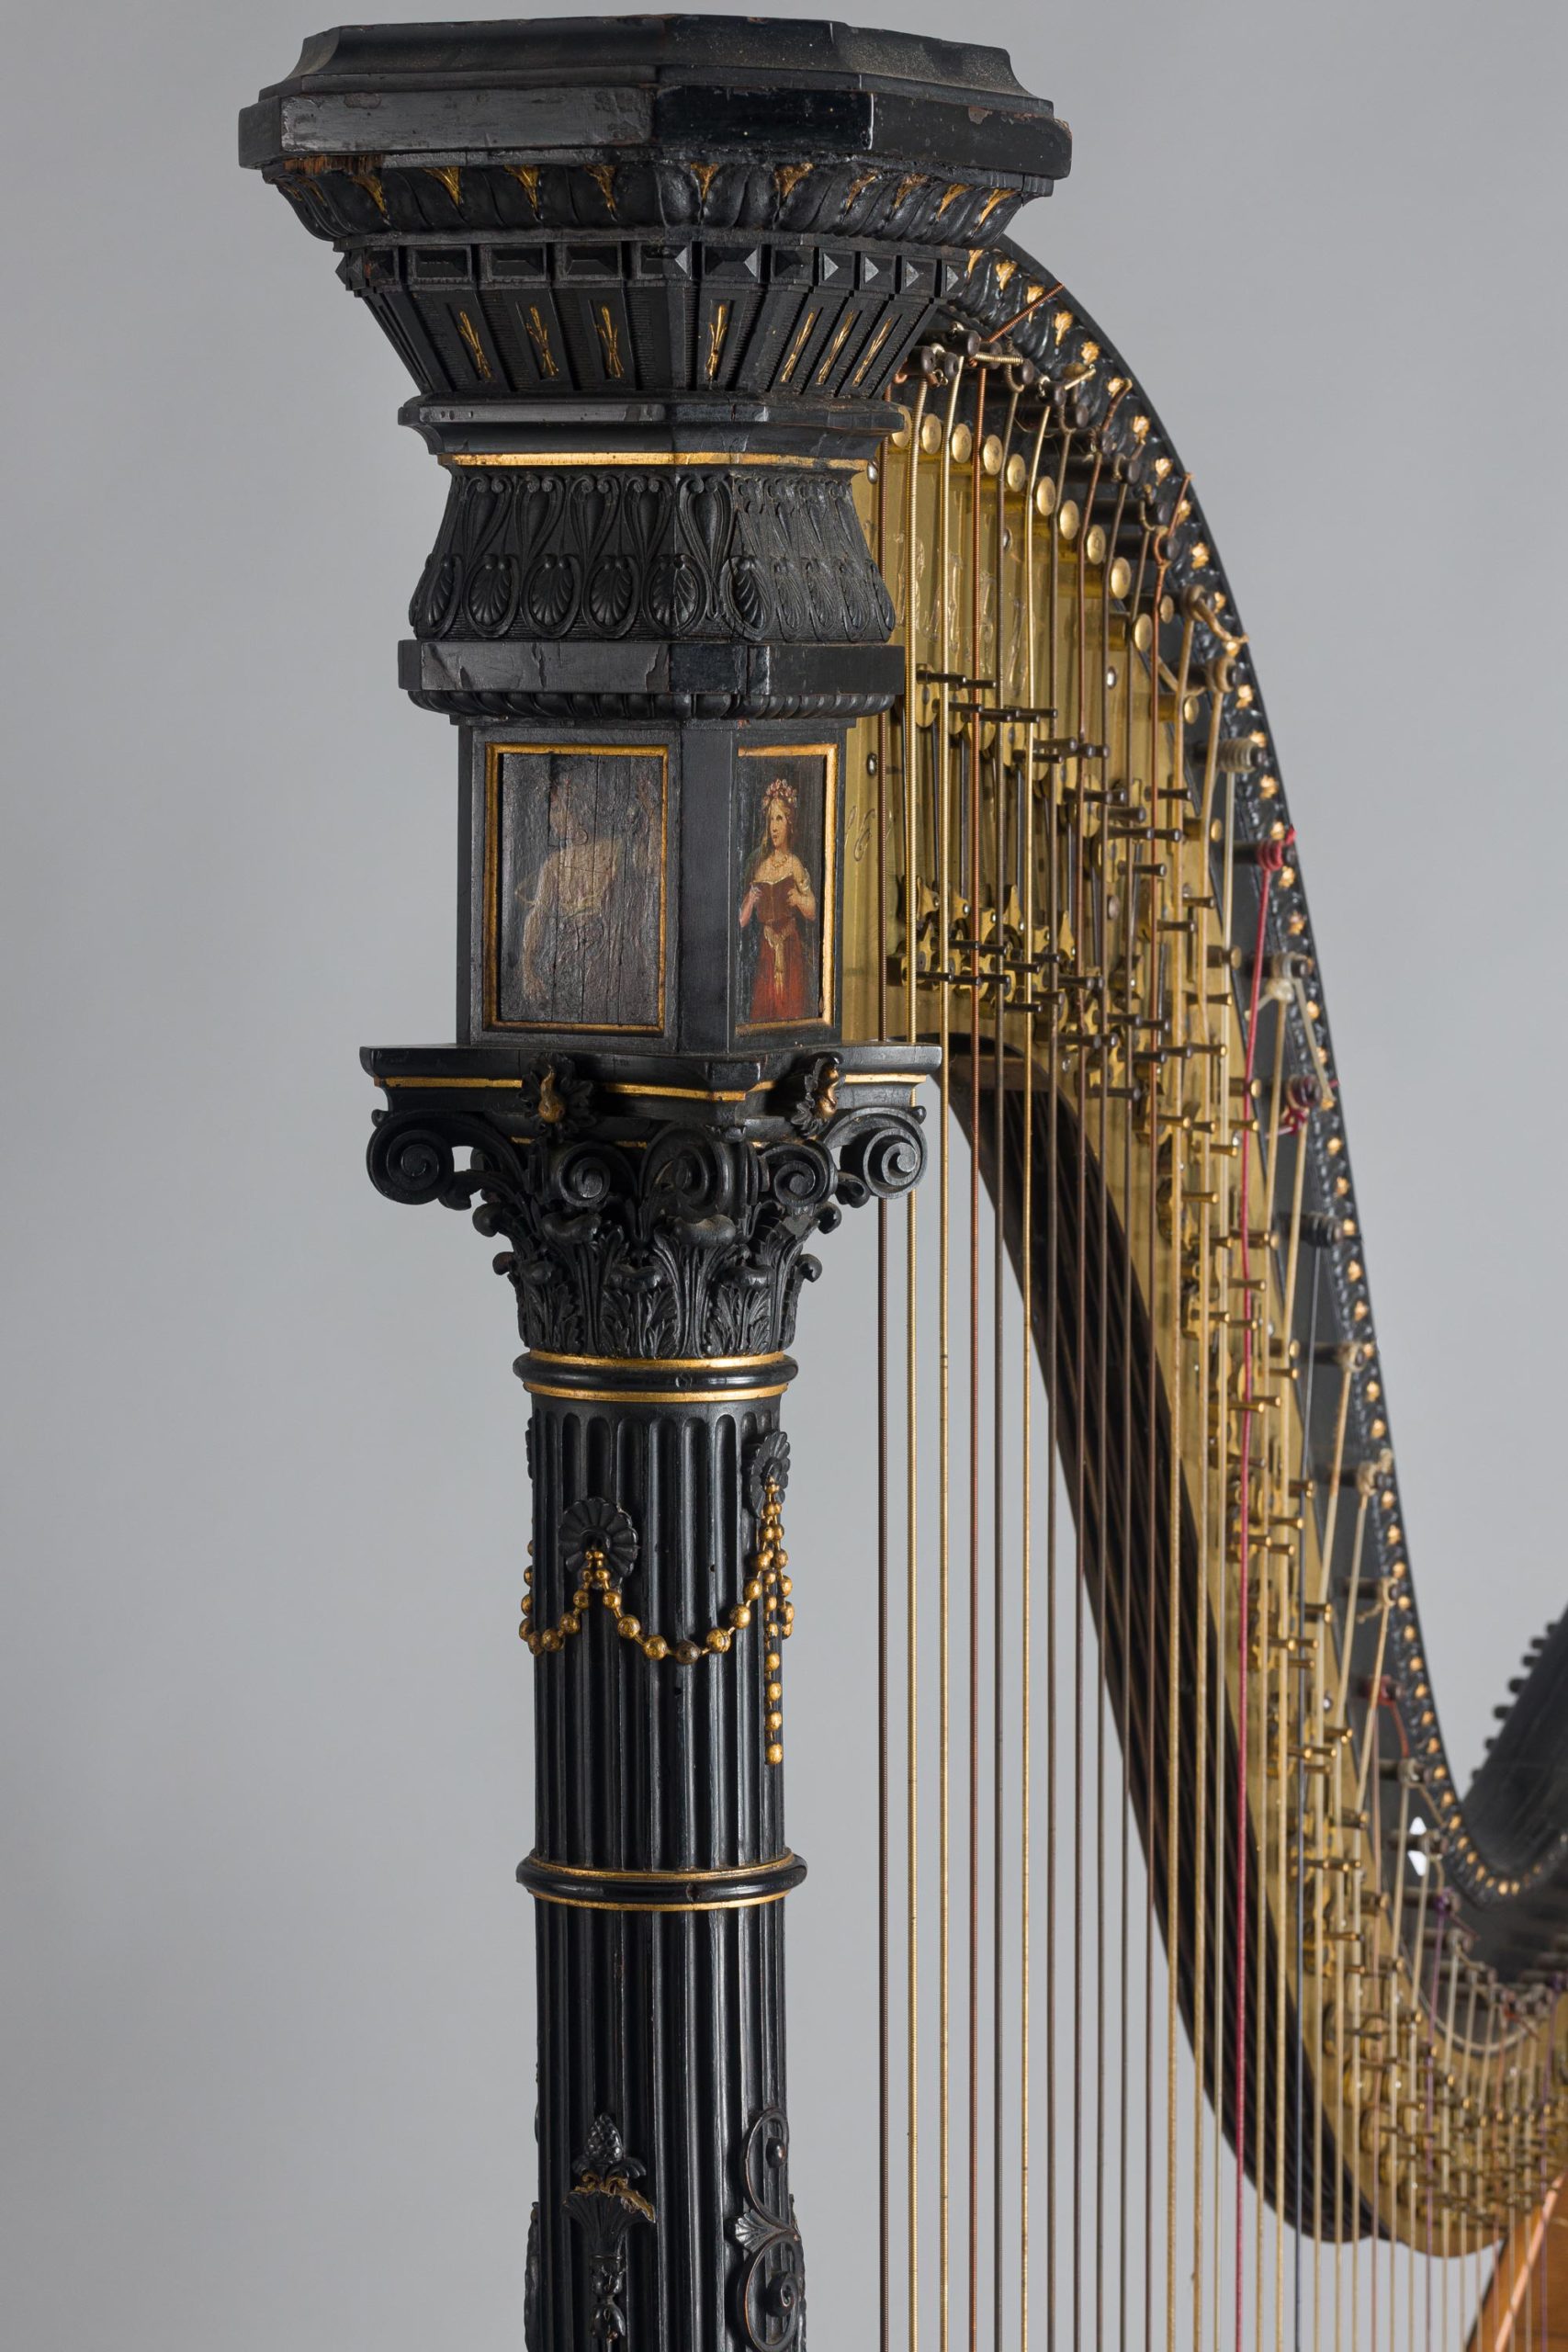 Harpe ERARD de style néo-grec, 1873